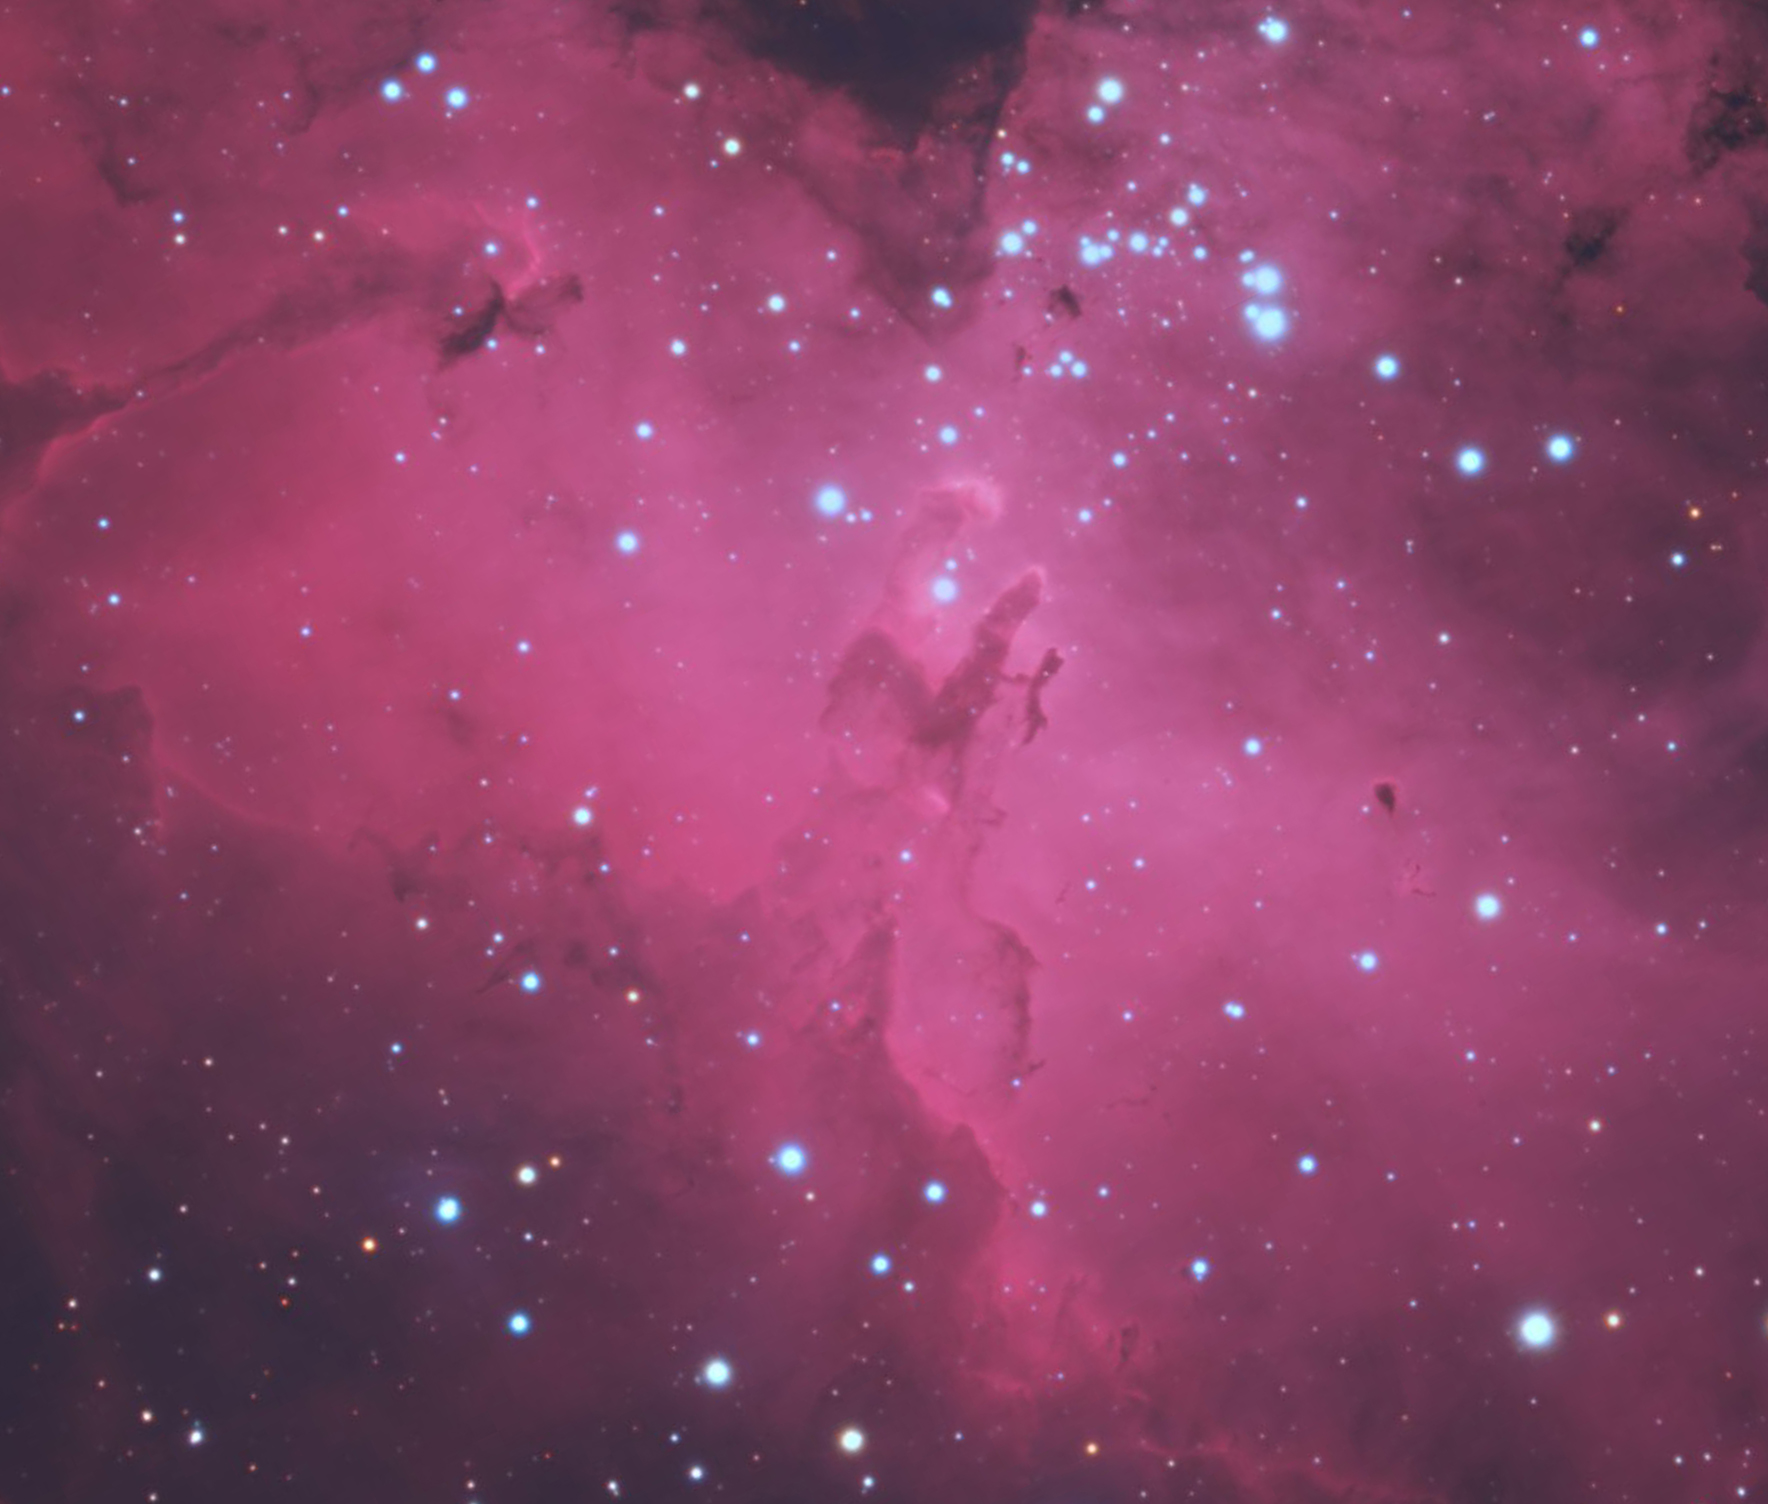 A nebula in shades of magenta